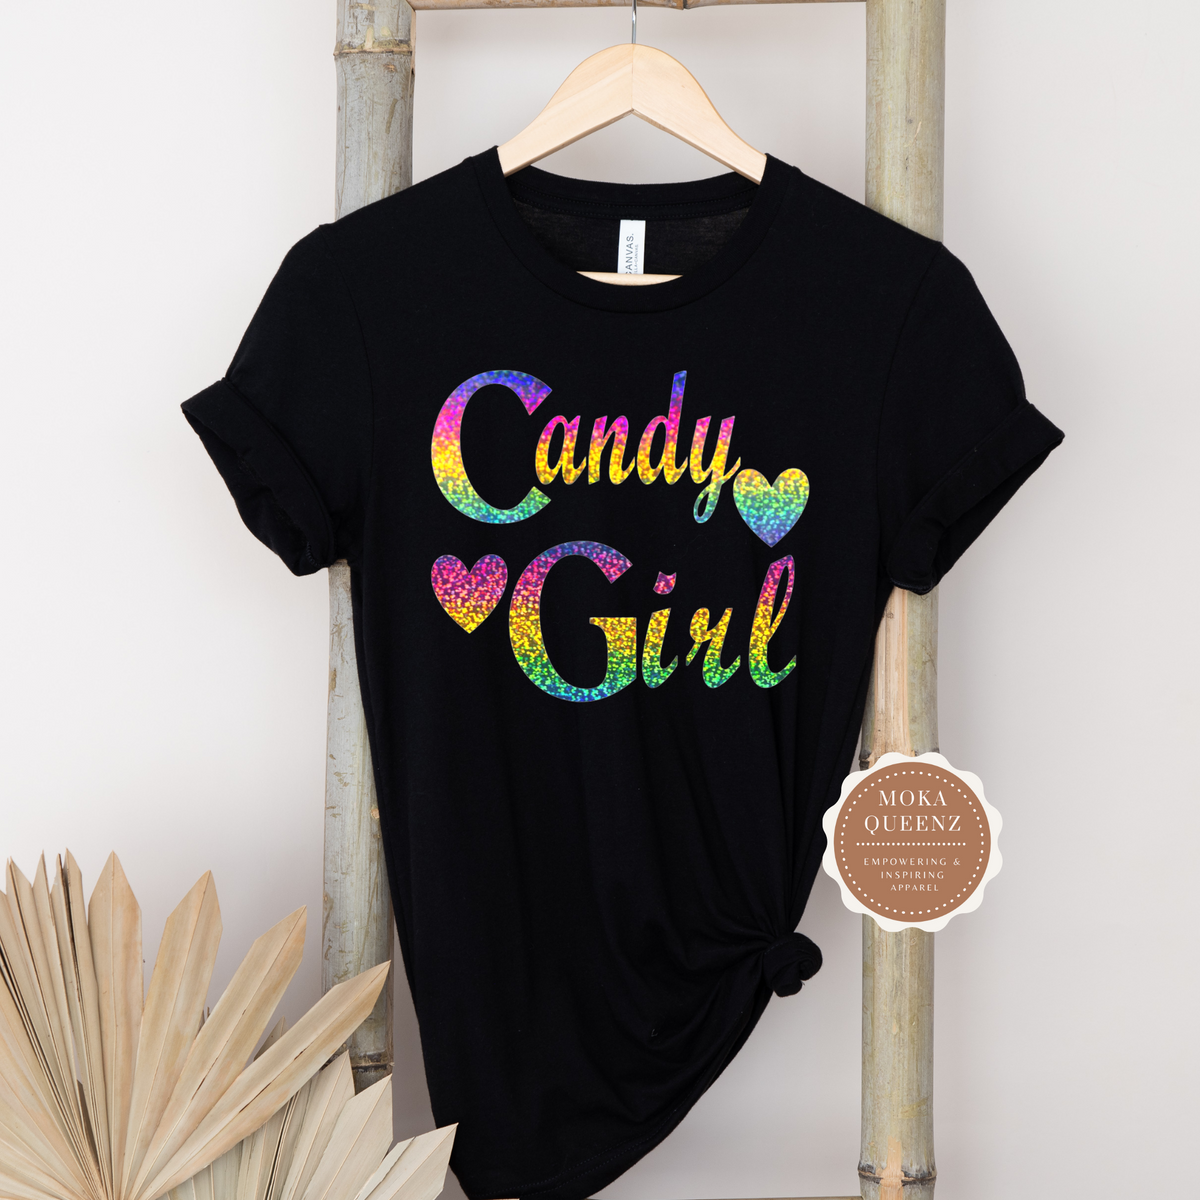 New Edition T Shirt MoKa Apparel Apparel Queenz Shirt – Girl Candy Queenz Mo-Ka | 